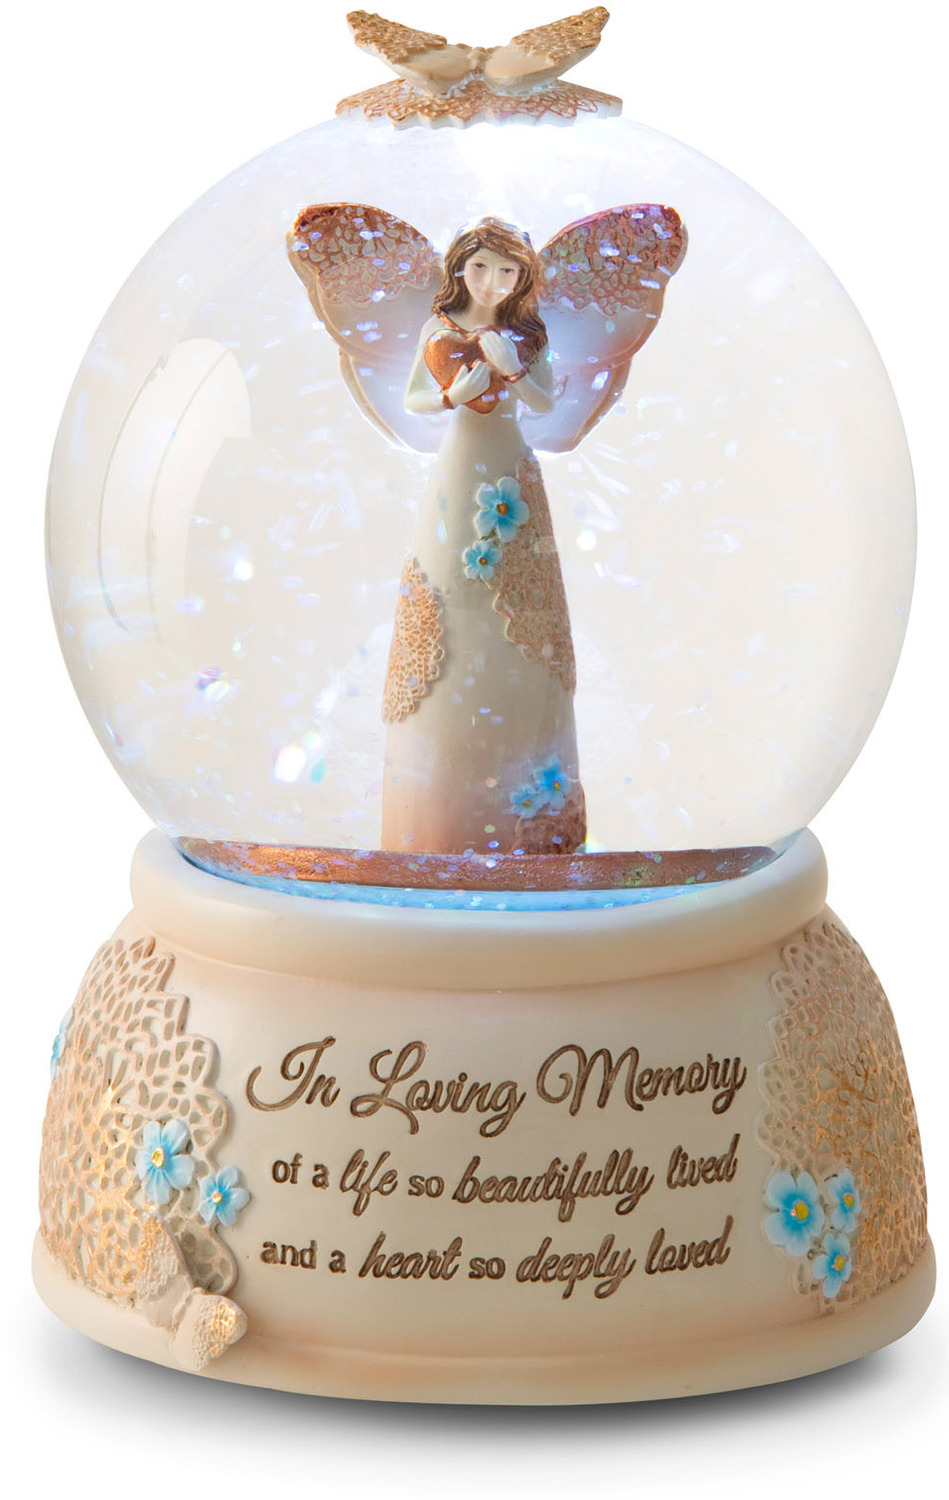 In Loving Memory by Light Your Way Memorial - In Loving Memory - LED Lit, Musical Water Globe